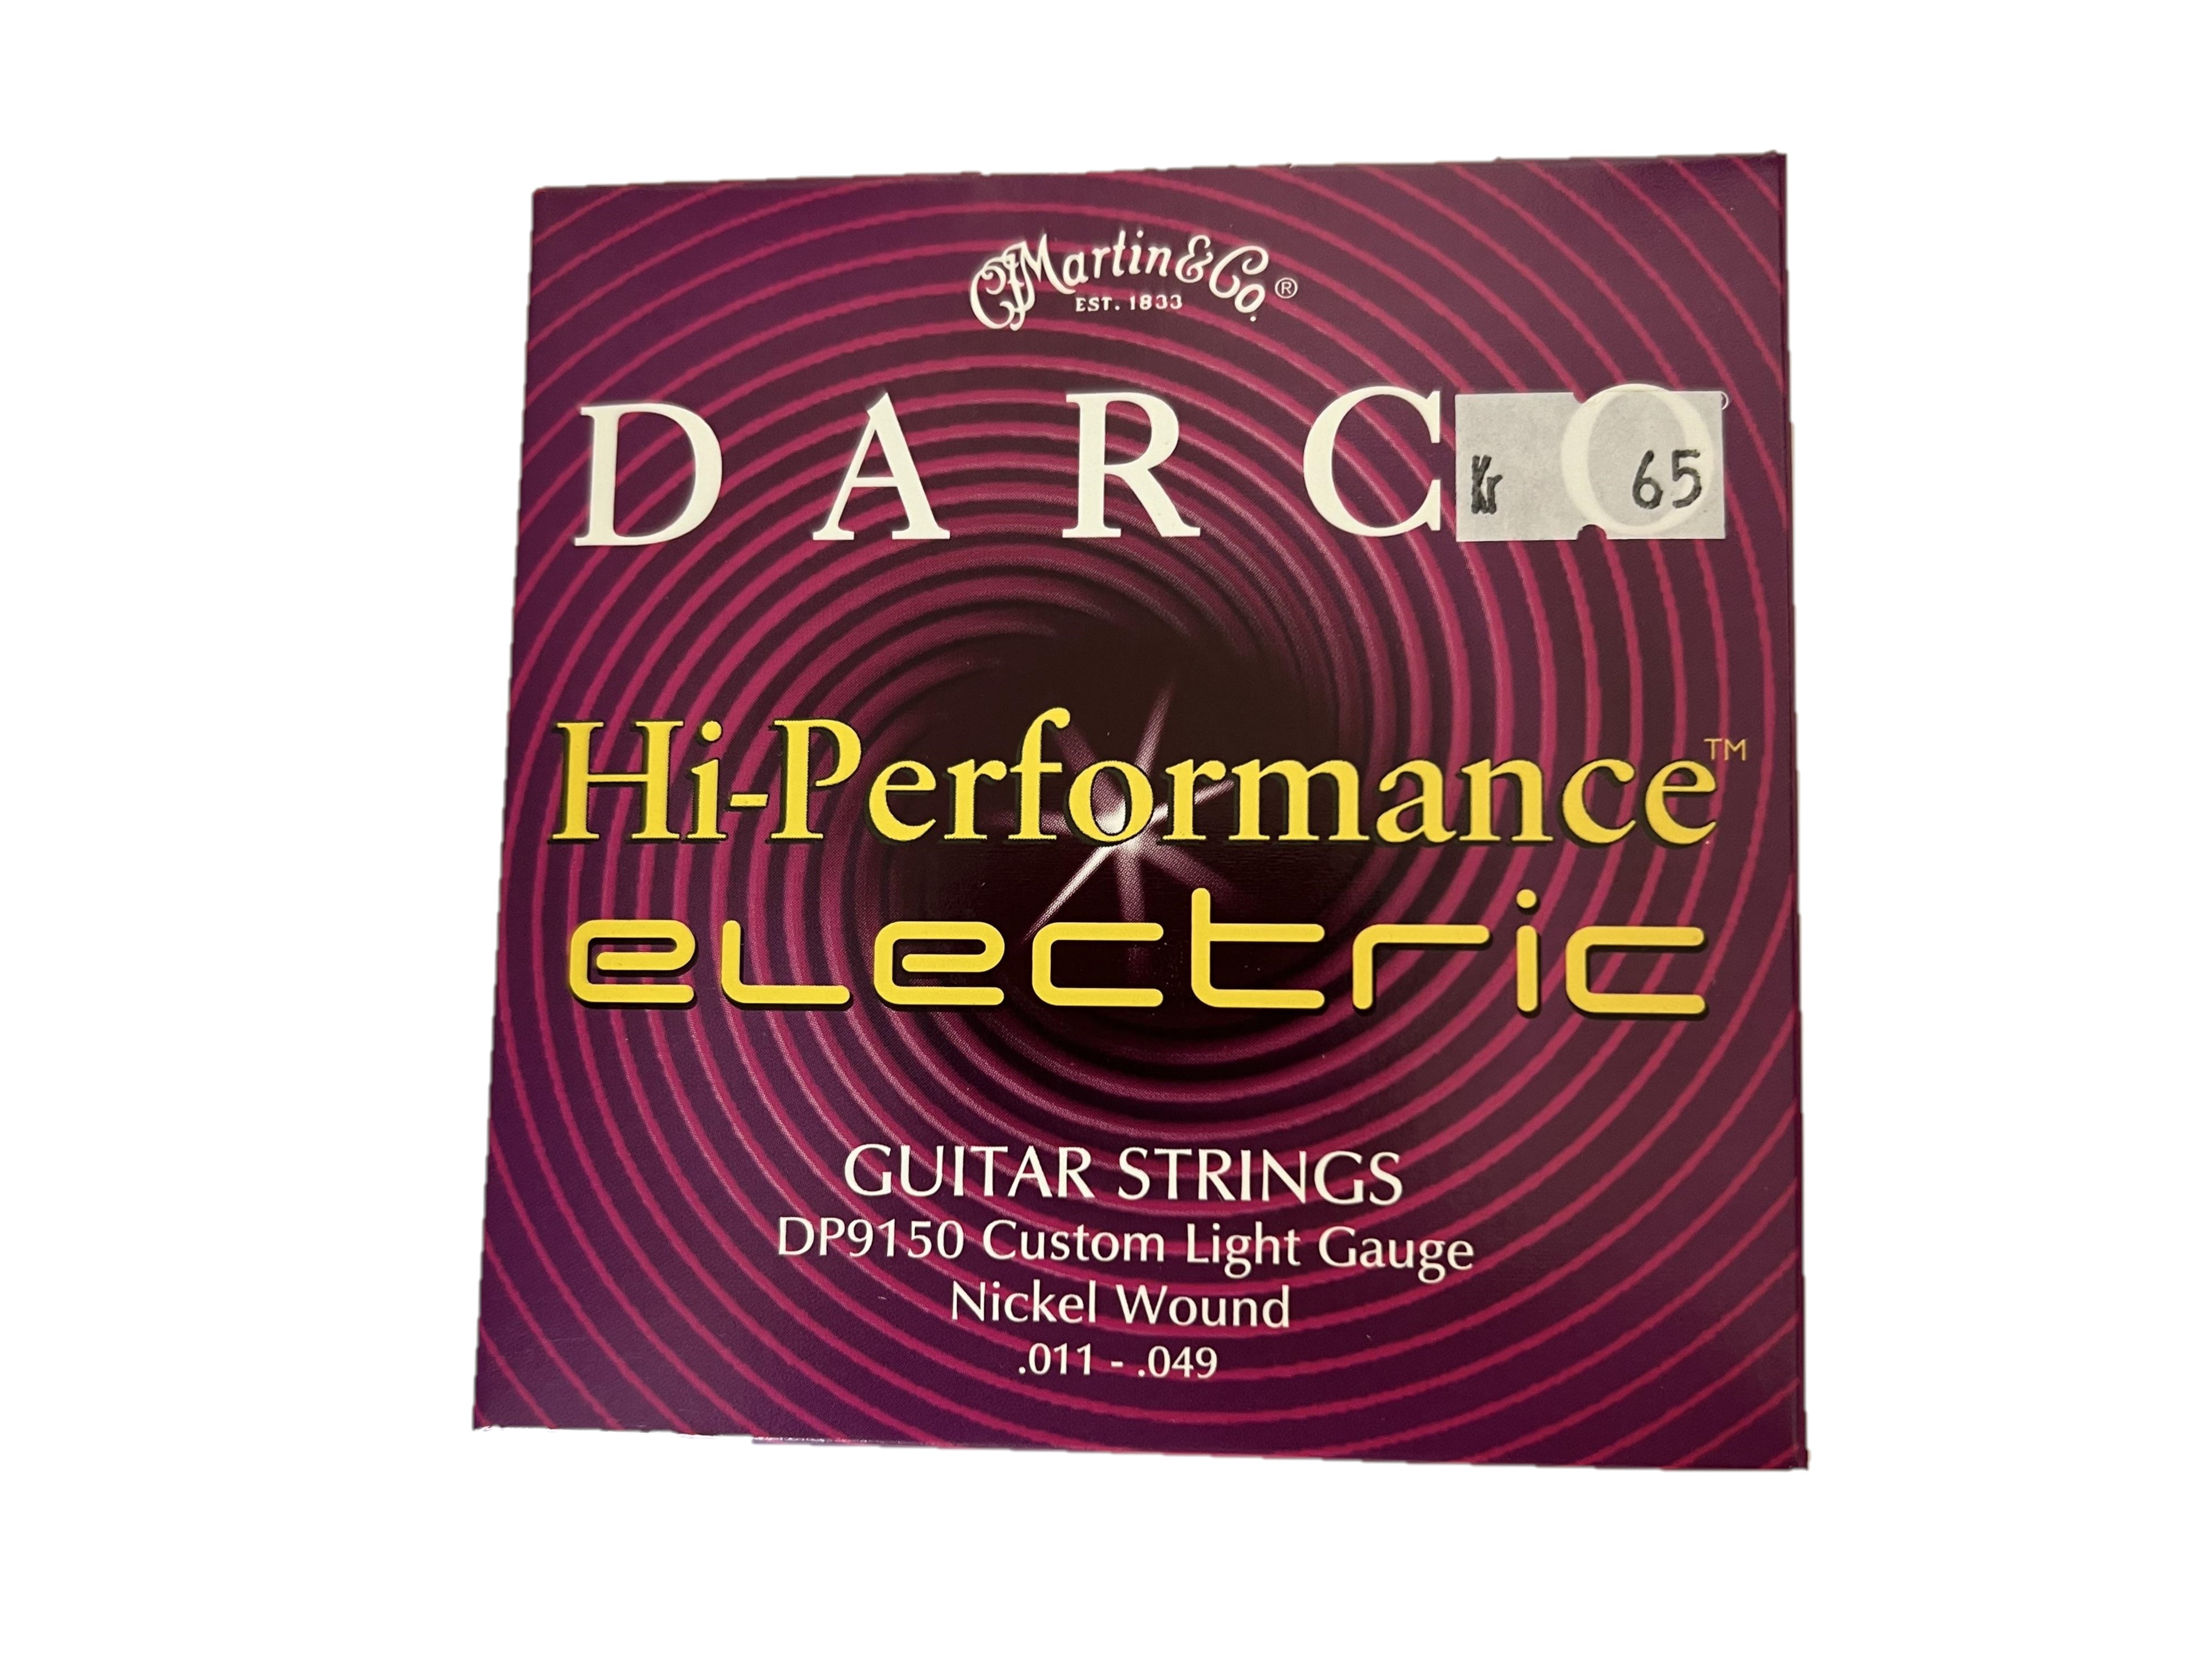 Køb Martin Darco Electric D9150 Custom Light - Pris 65.00 kr.